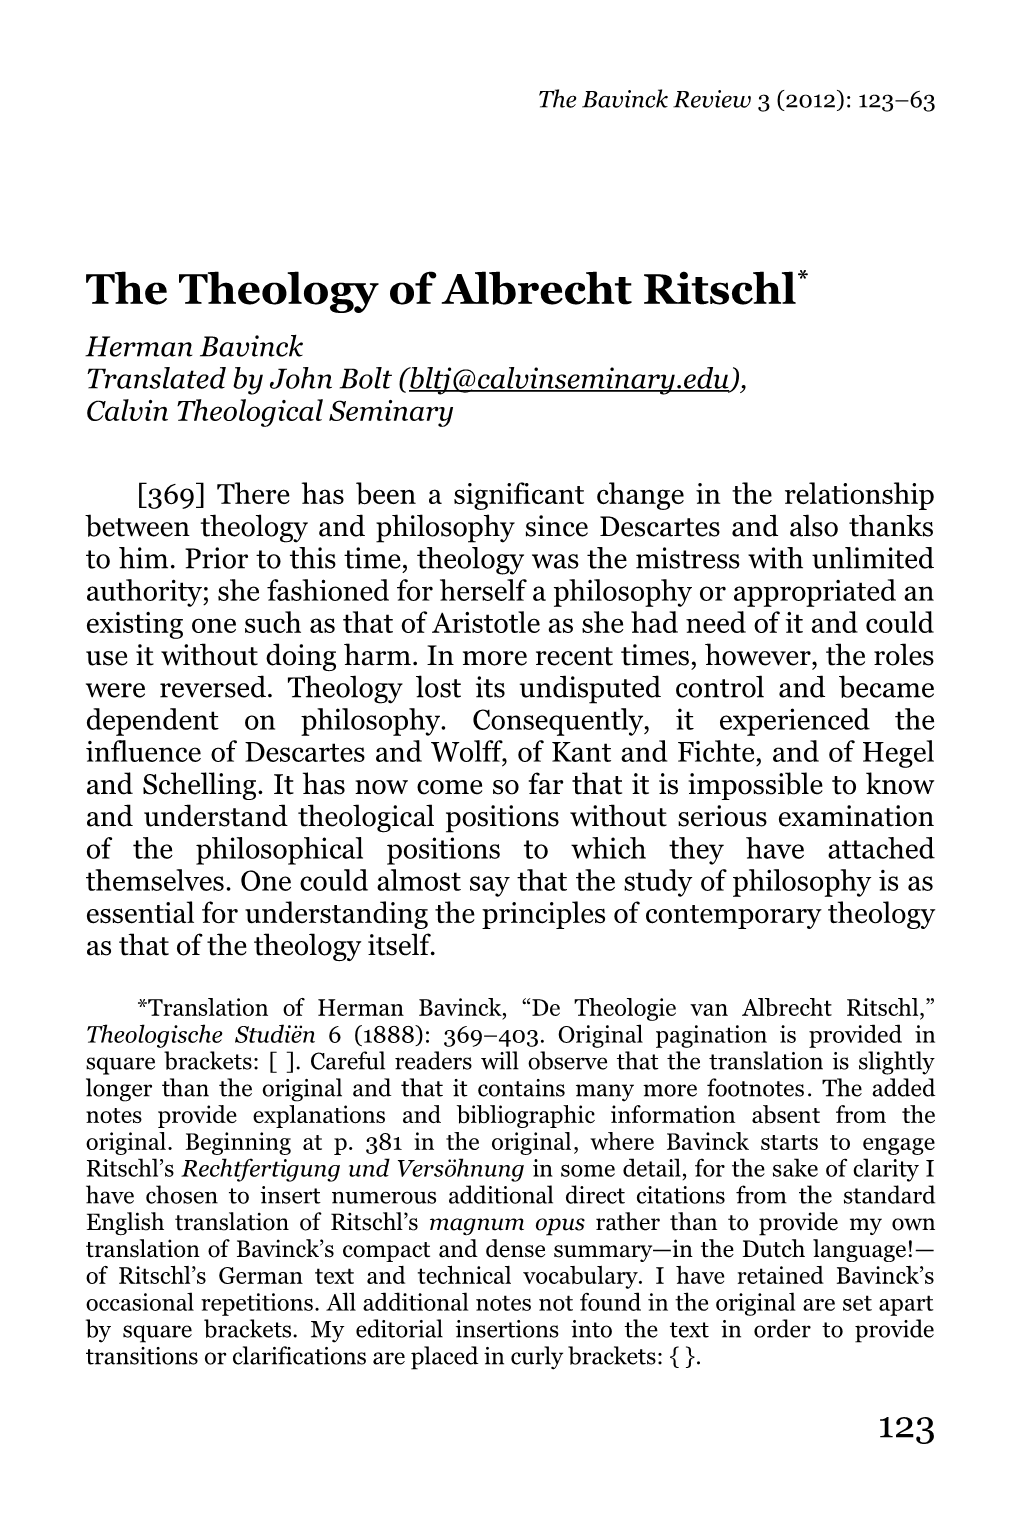 The Theology of Albrecht Ritschl* Herman Bavinck Translated by John Bolt (Bltj@Calvinseminary.Edu), Calvin Theological Seminary